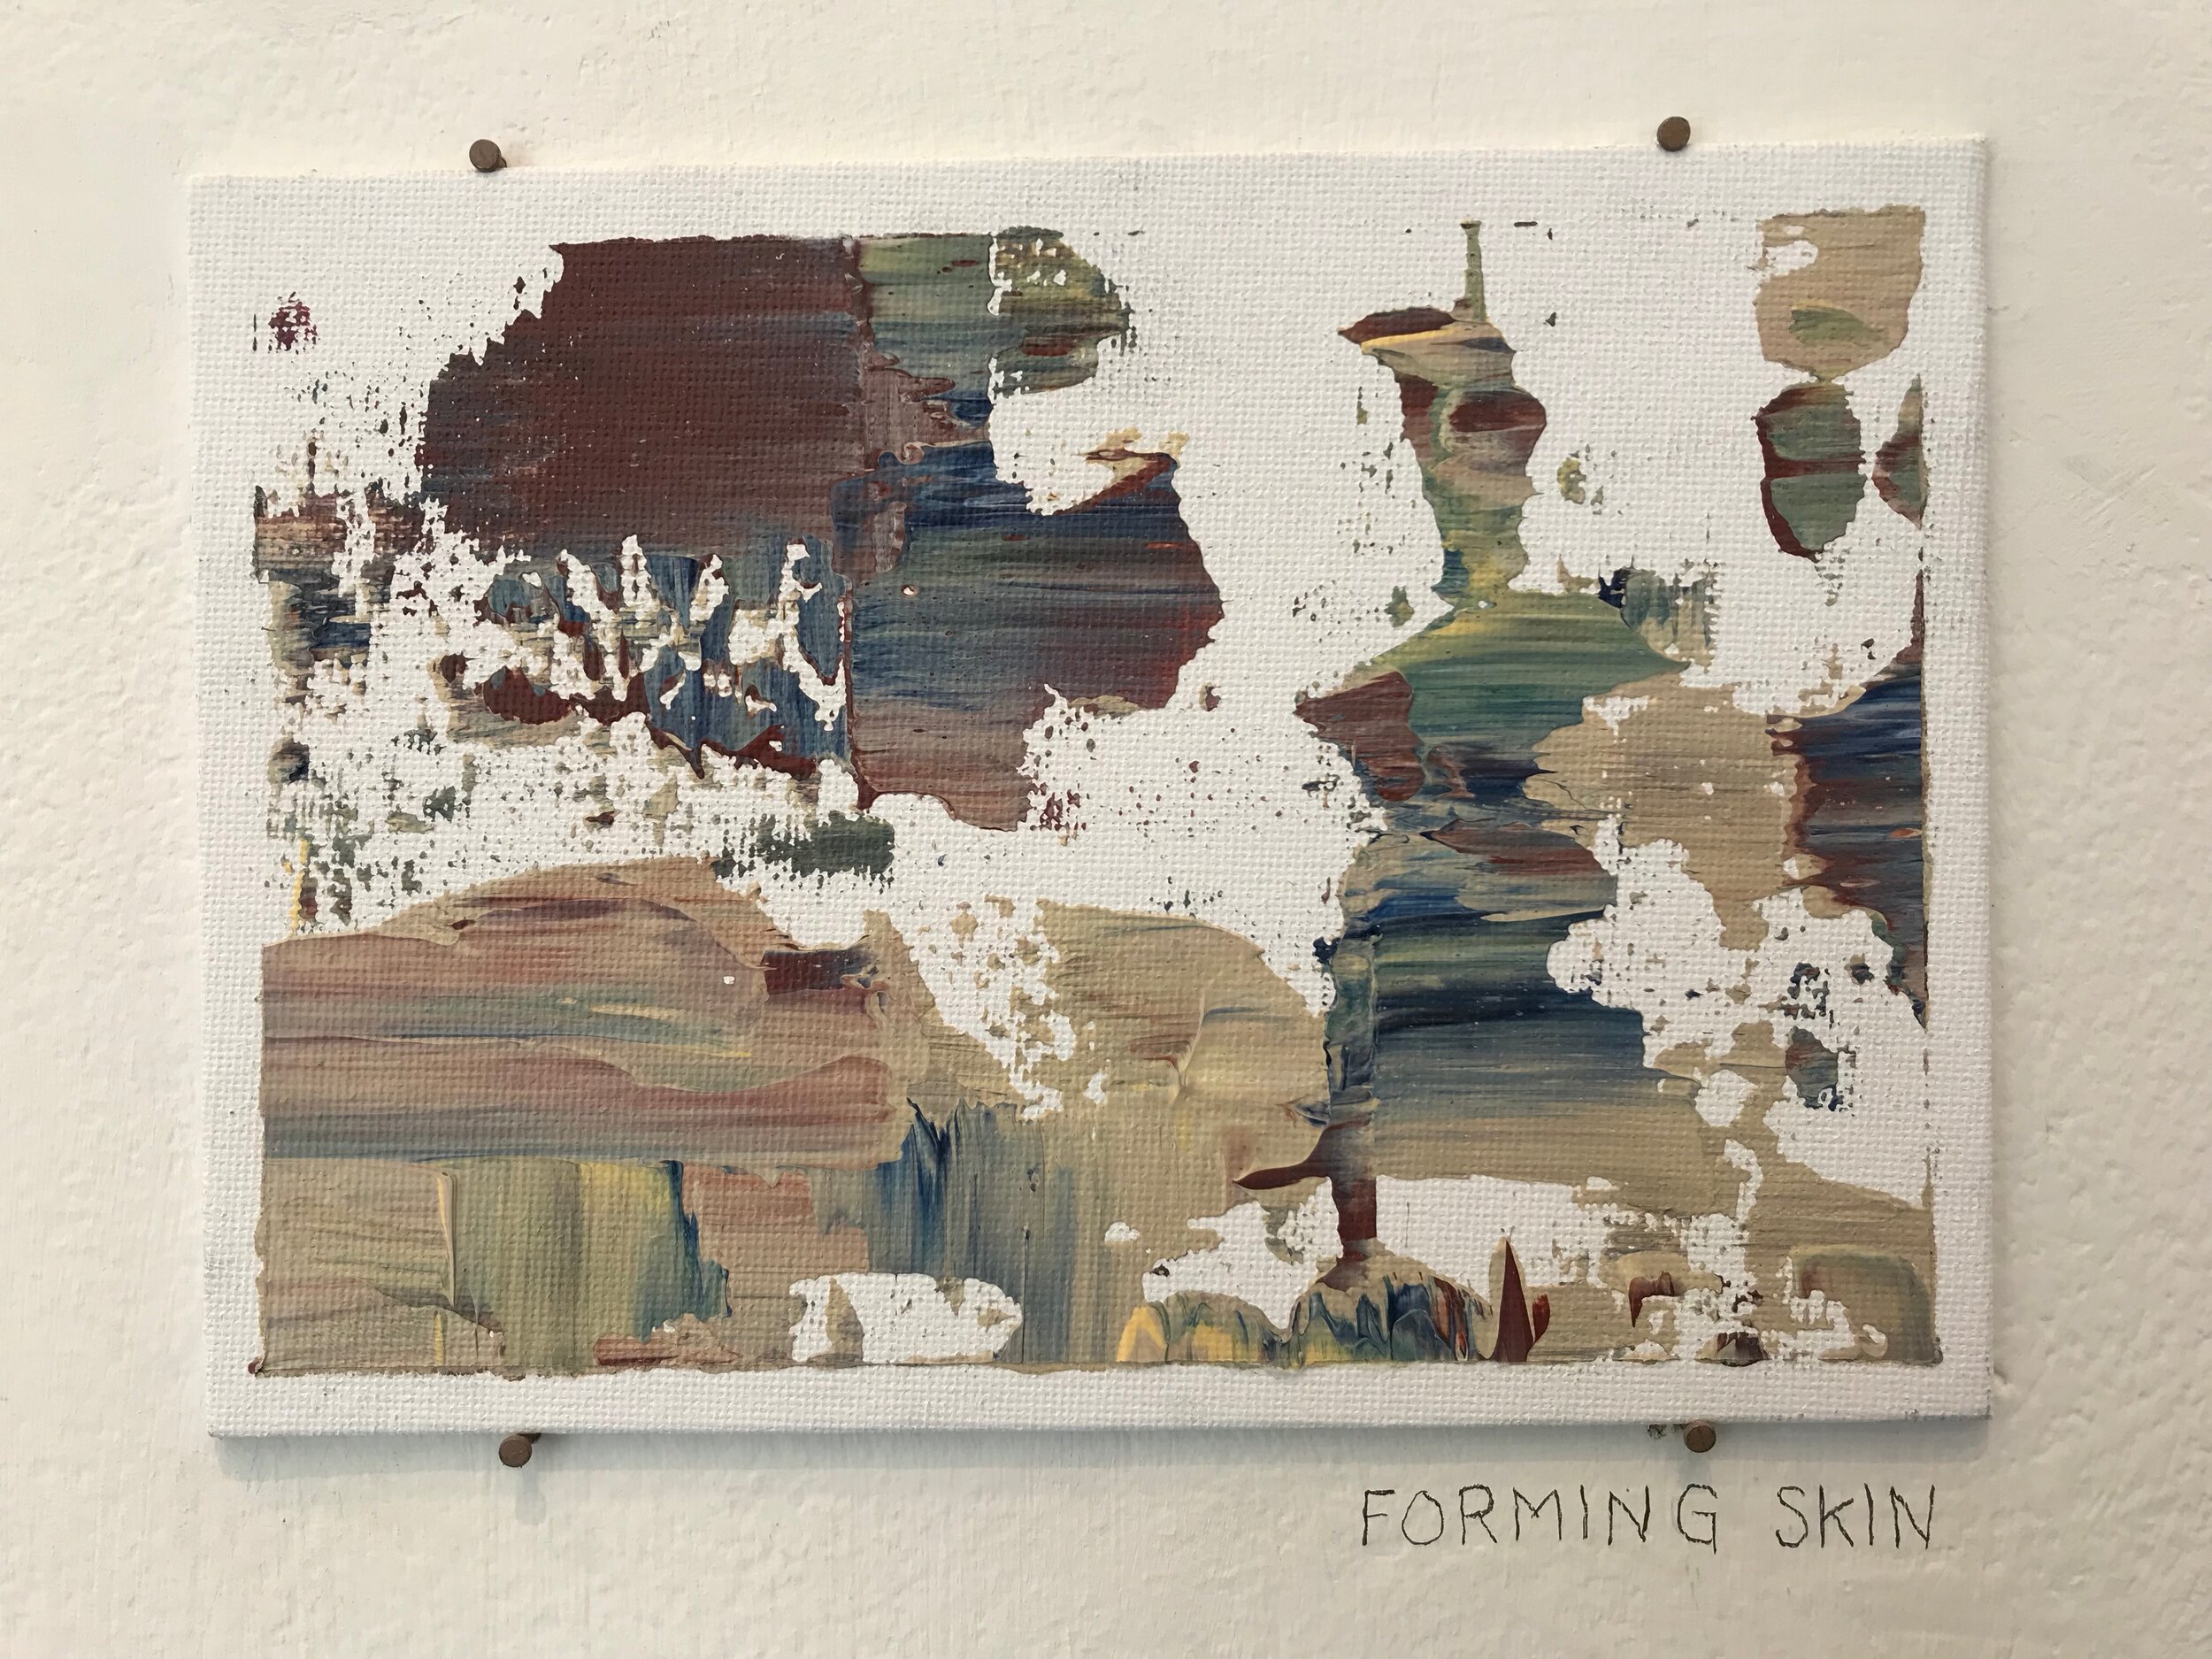 Body: Forming Skin